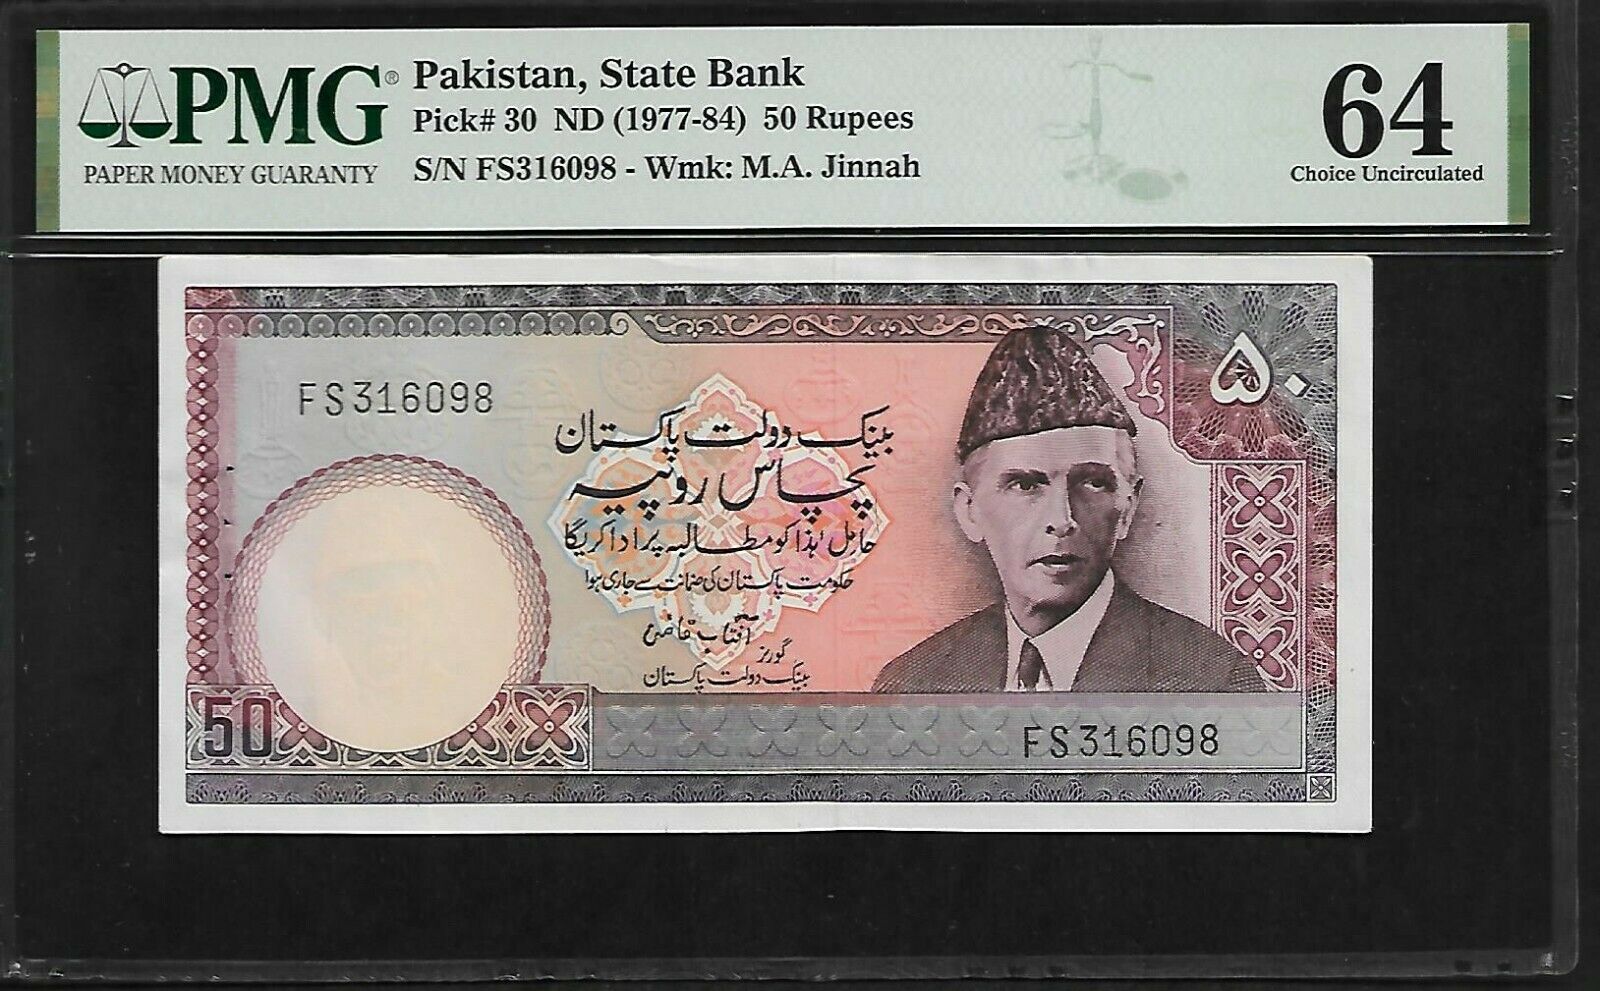 Pakistan 50 Rupees 1977 - 84  PMG 64 UNC  Pick # 30 PMG Population 6/7